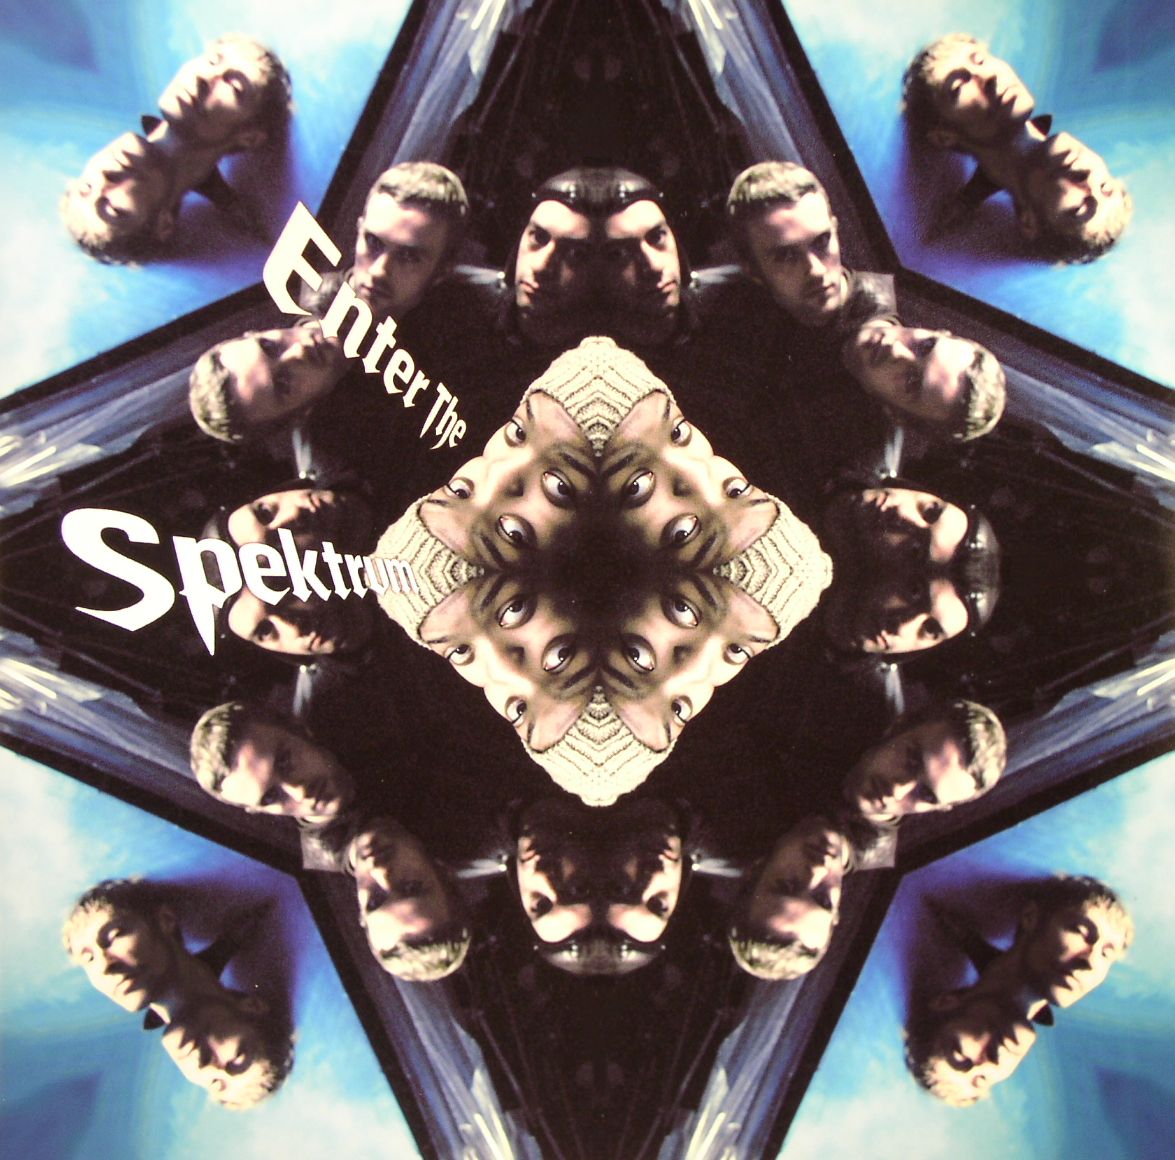 SPEKTRUM - Enter The Spektrum